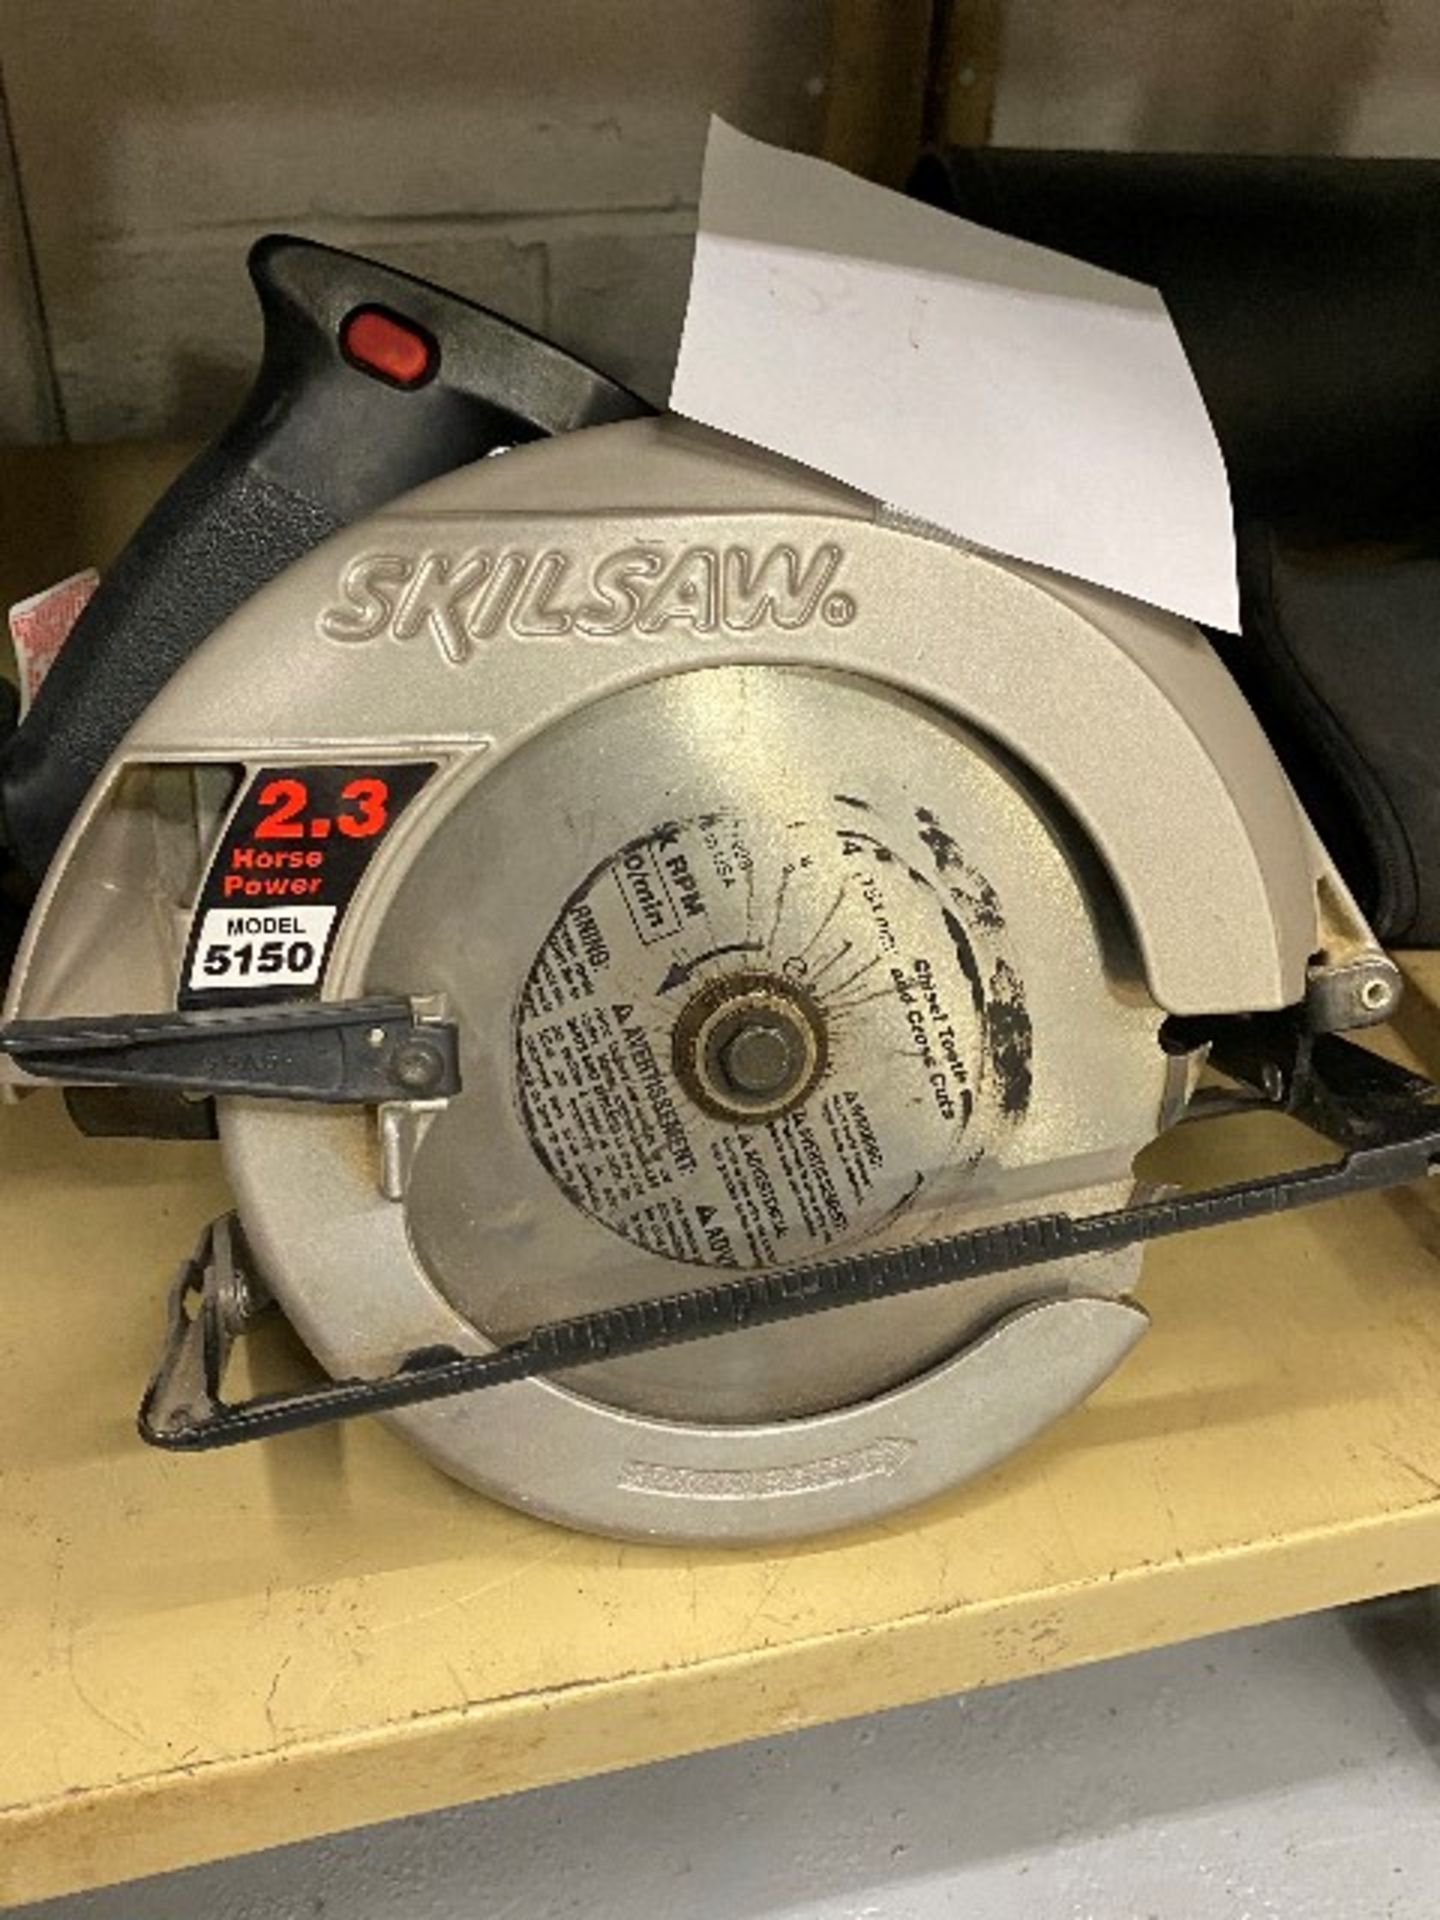 Skilsaw 5150 7 1/4” Circular saw, 2.3 hp